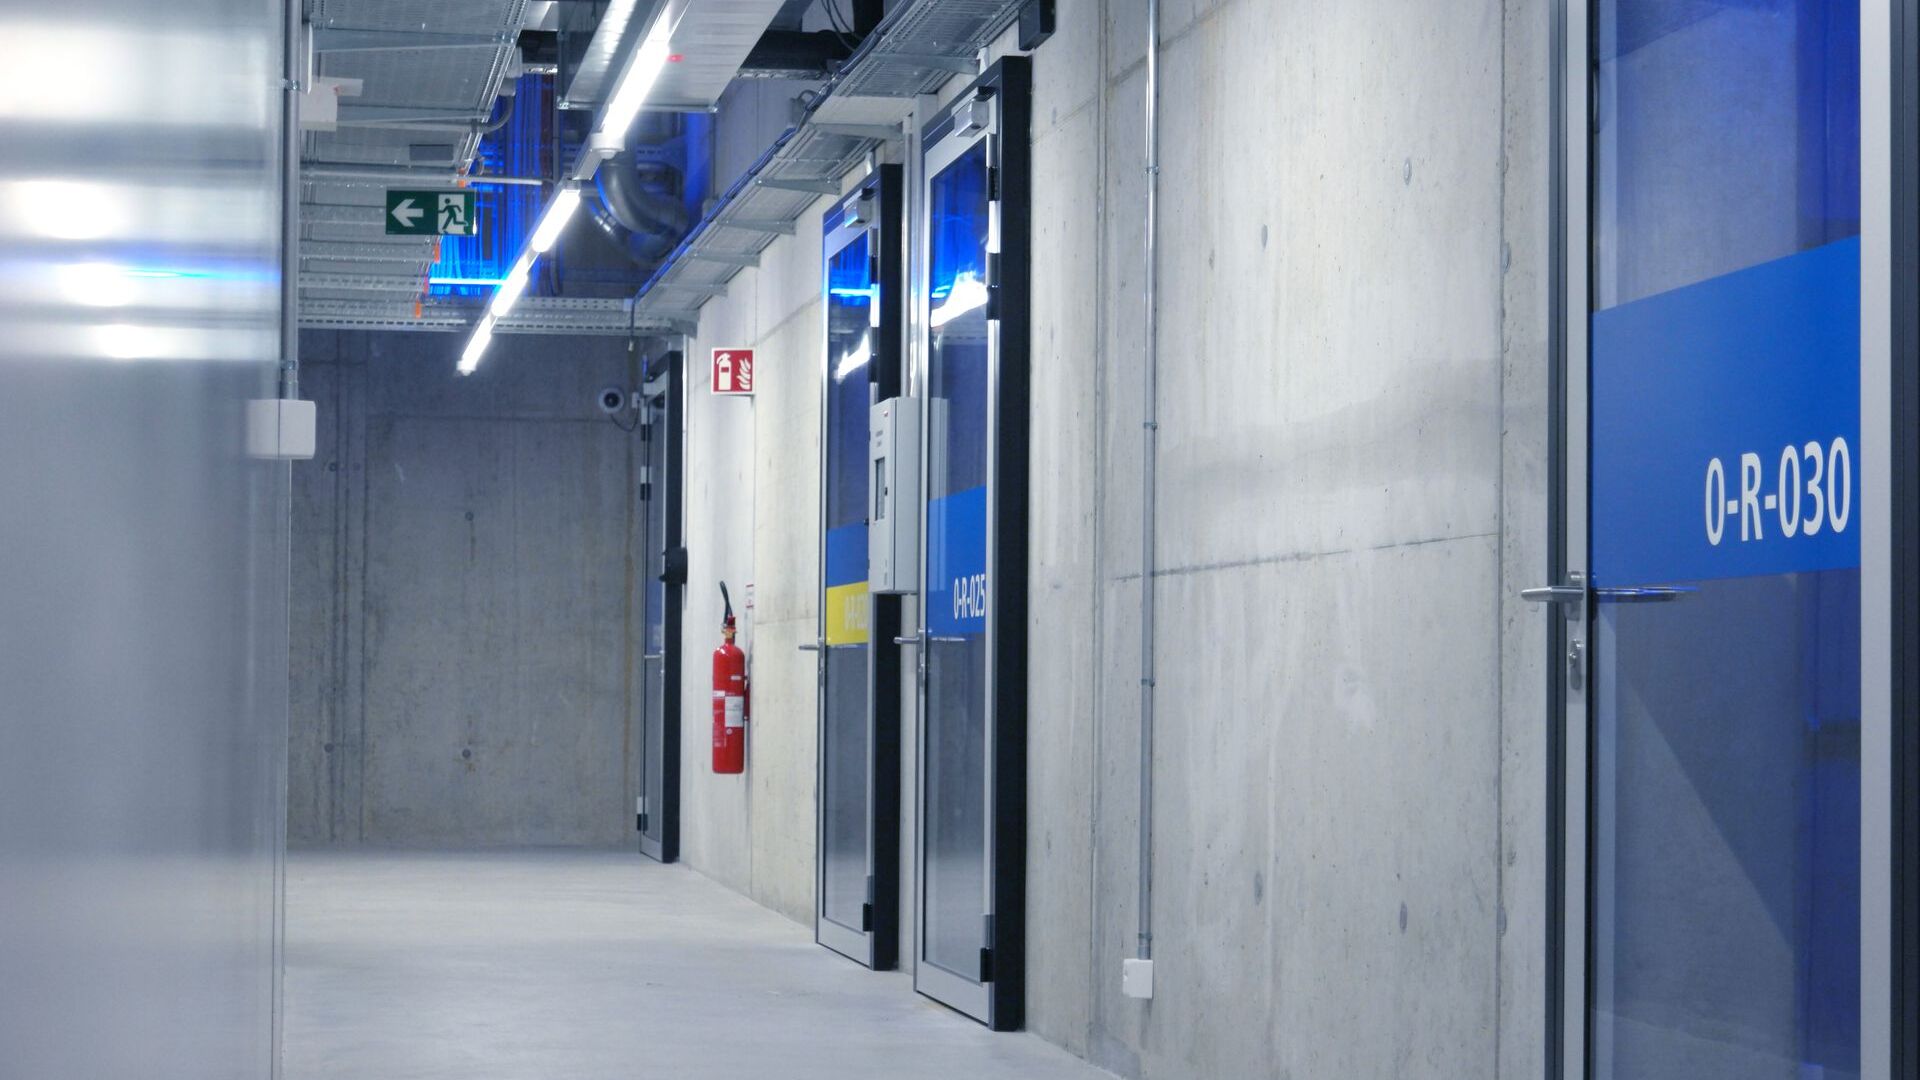 Notranji hodniki Rechenzentrum Ostschweiz v Gaisu v Appenzell Ausserrhodenu